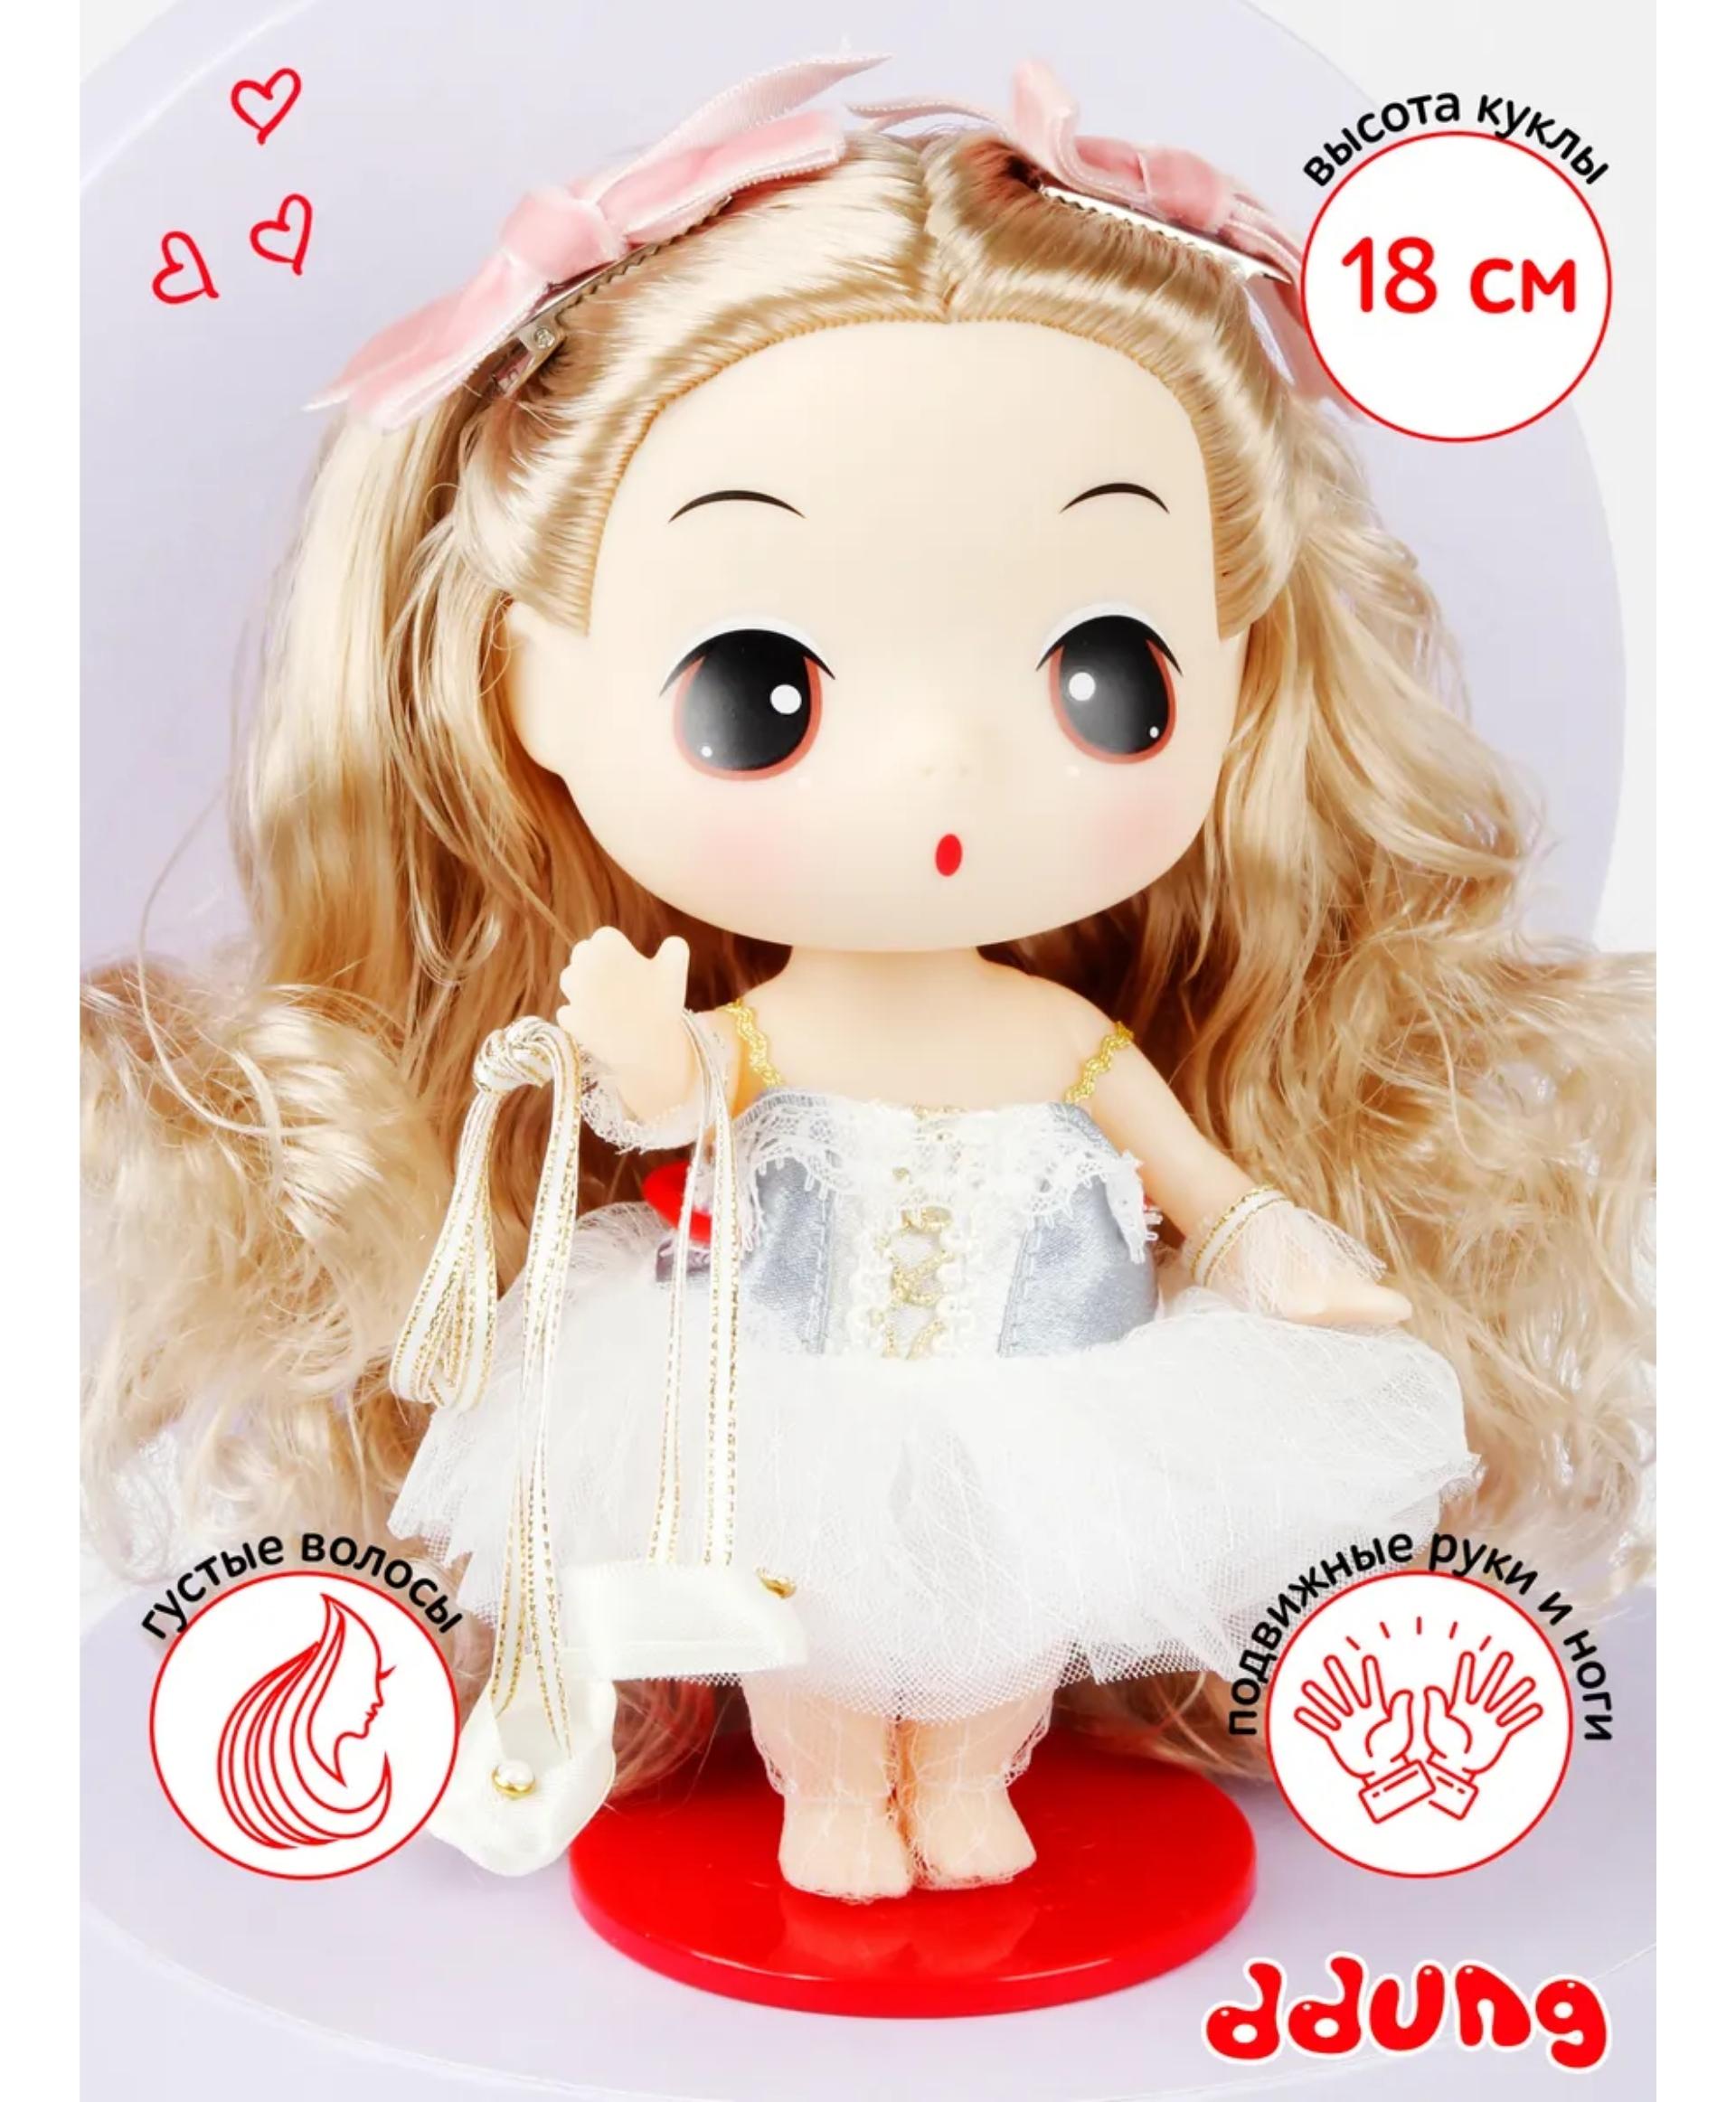 Ddung Кукла коллекционная Балерина FDE1848 - фото 2